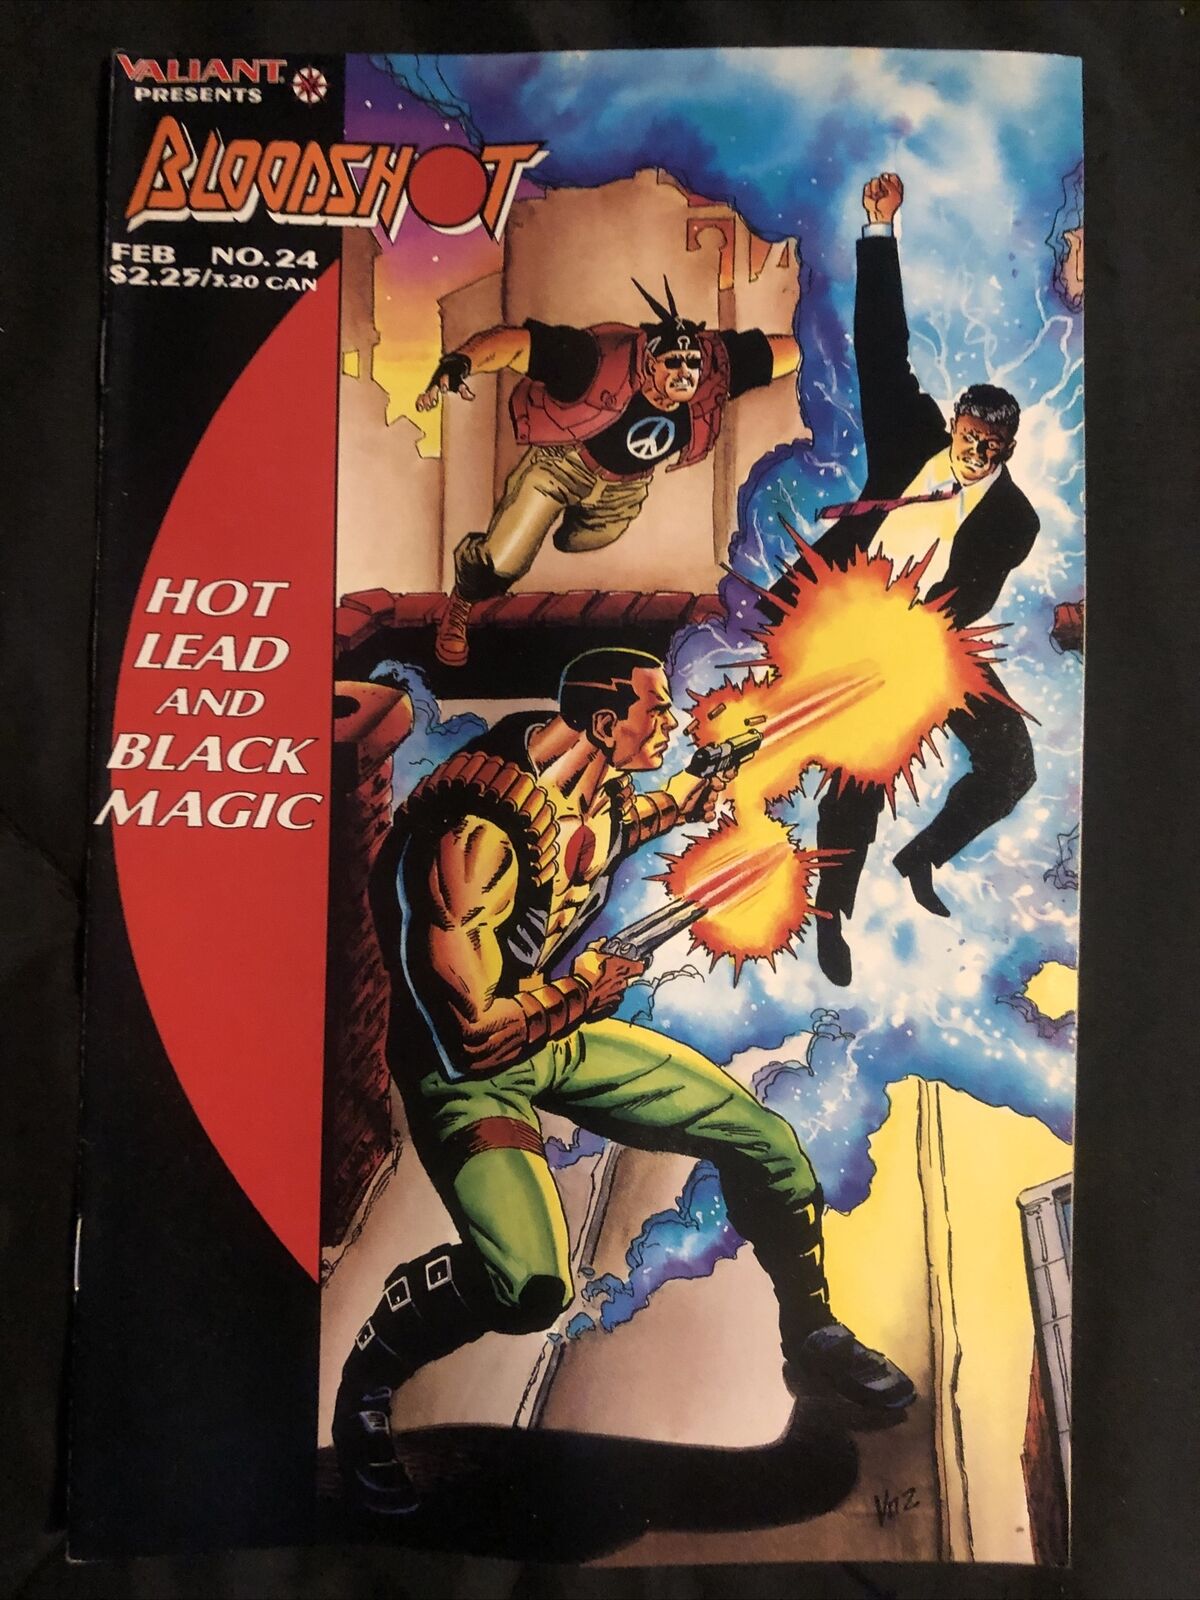 Bloodshot #24, Vol. 1 (1992-1996) Valiant Entertainment